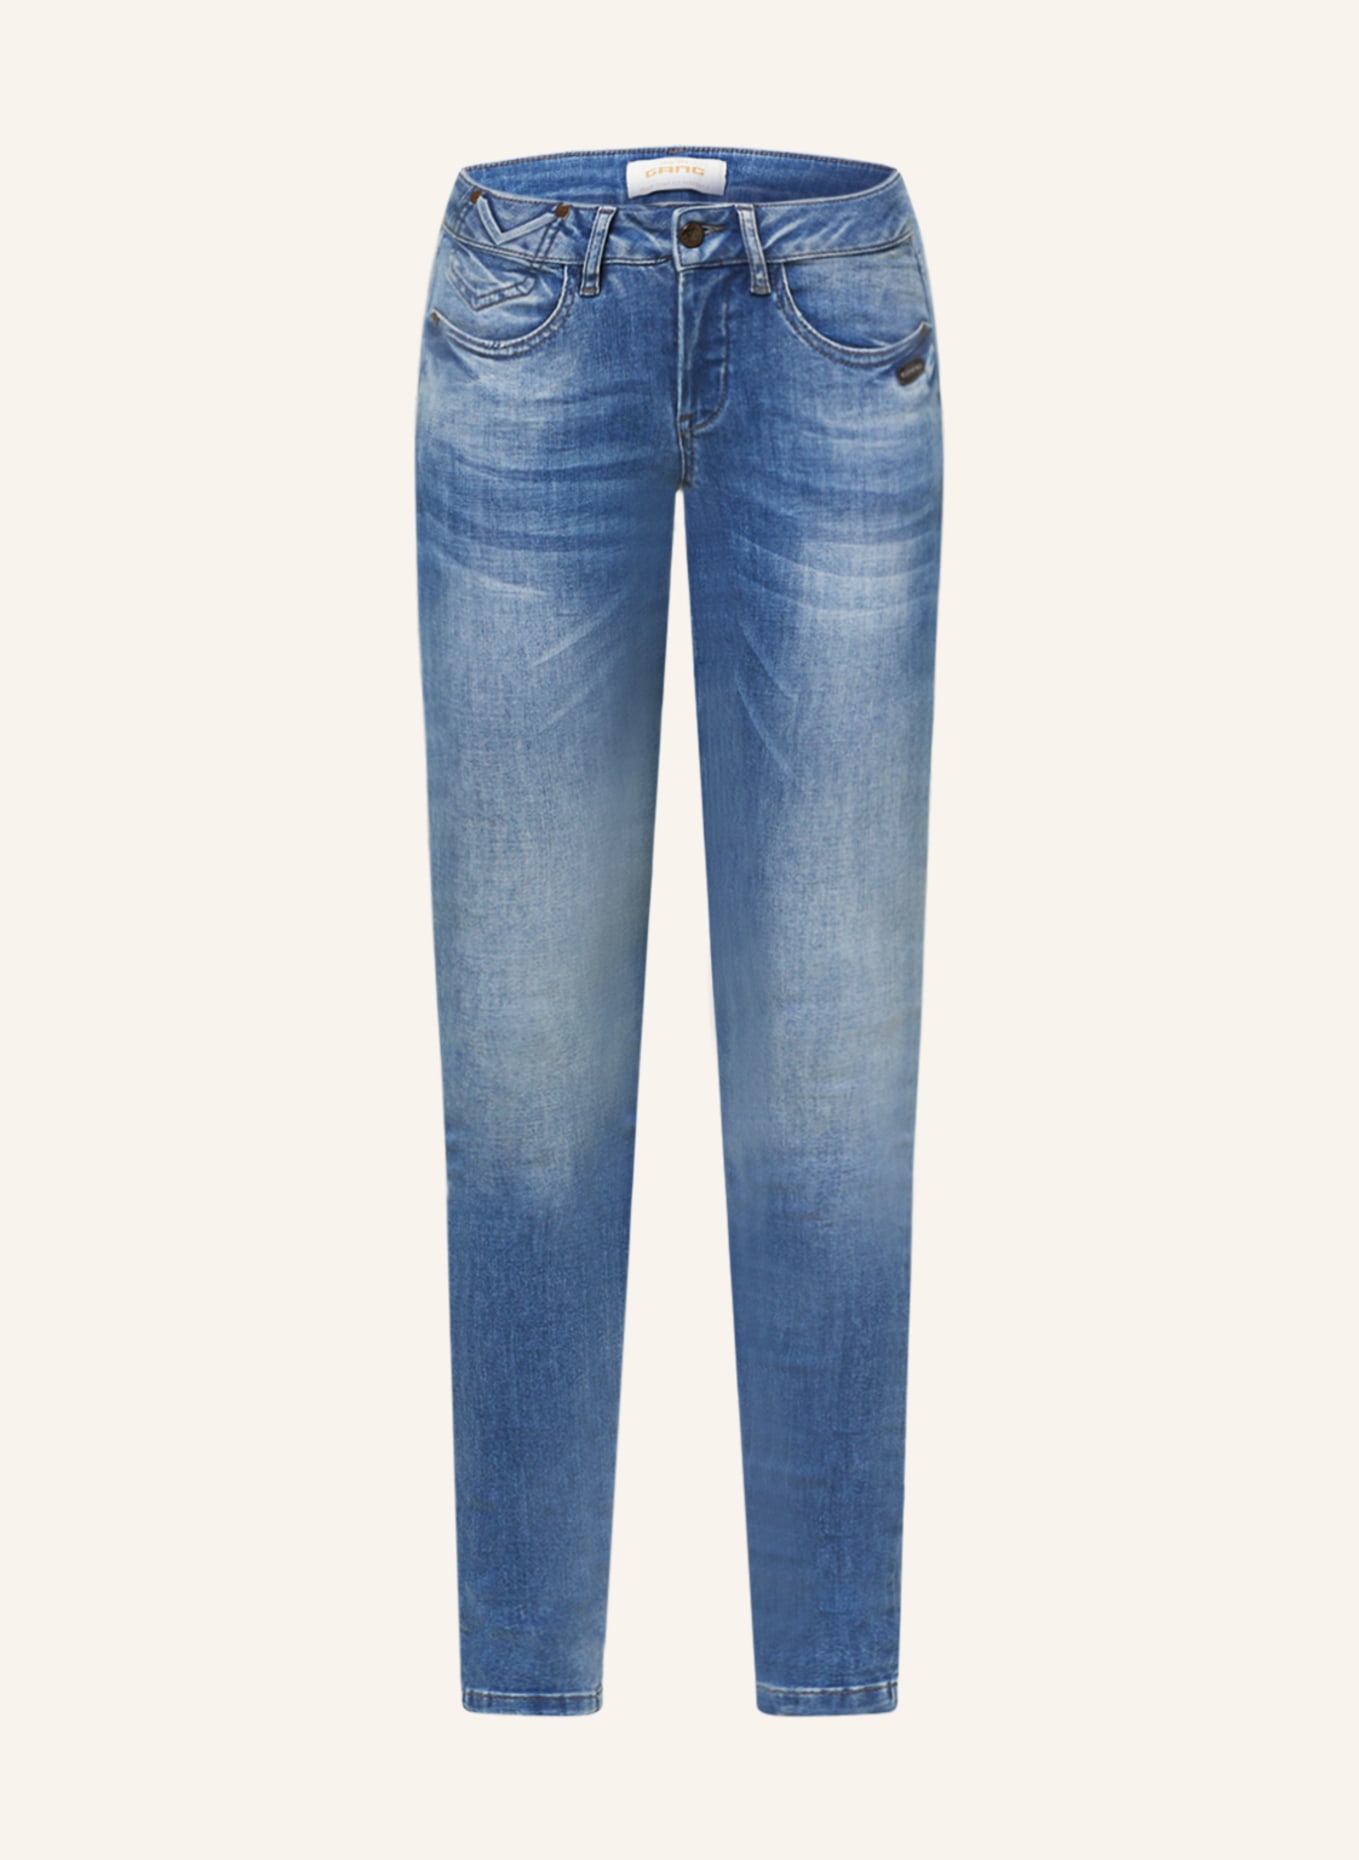 GANG Skinny Jeans PINA, Farbe: 7306 classic vint (Bild 1)